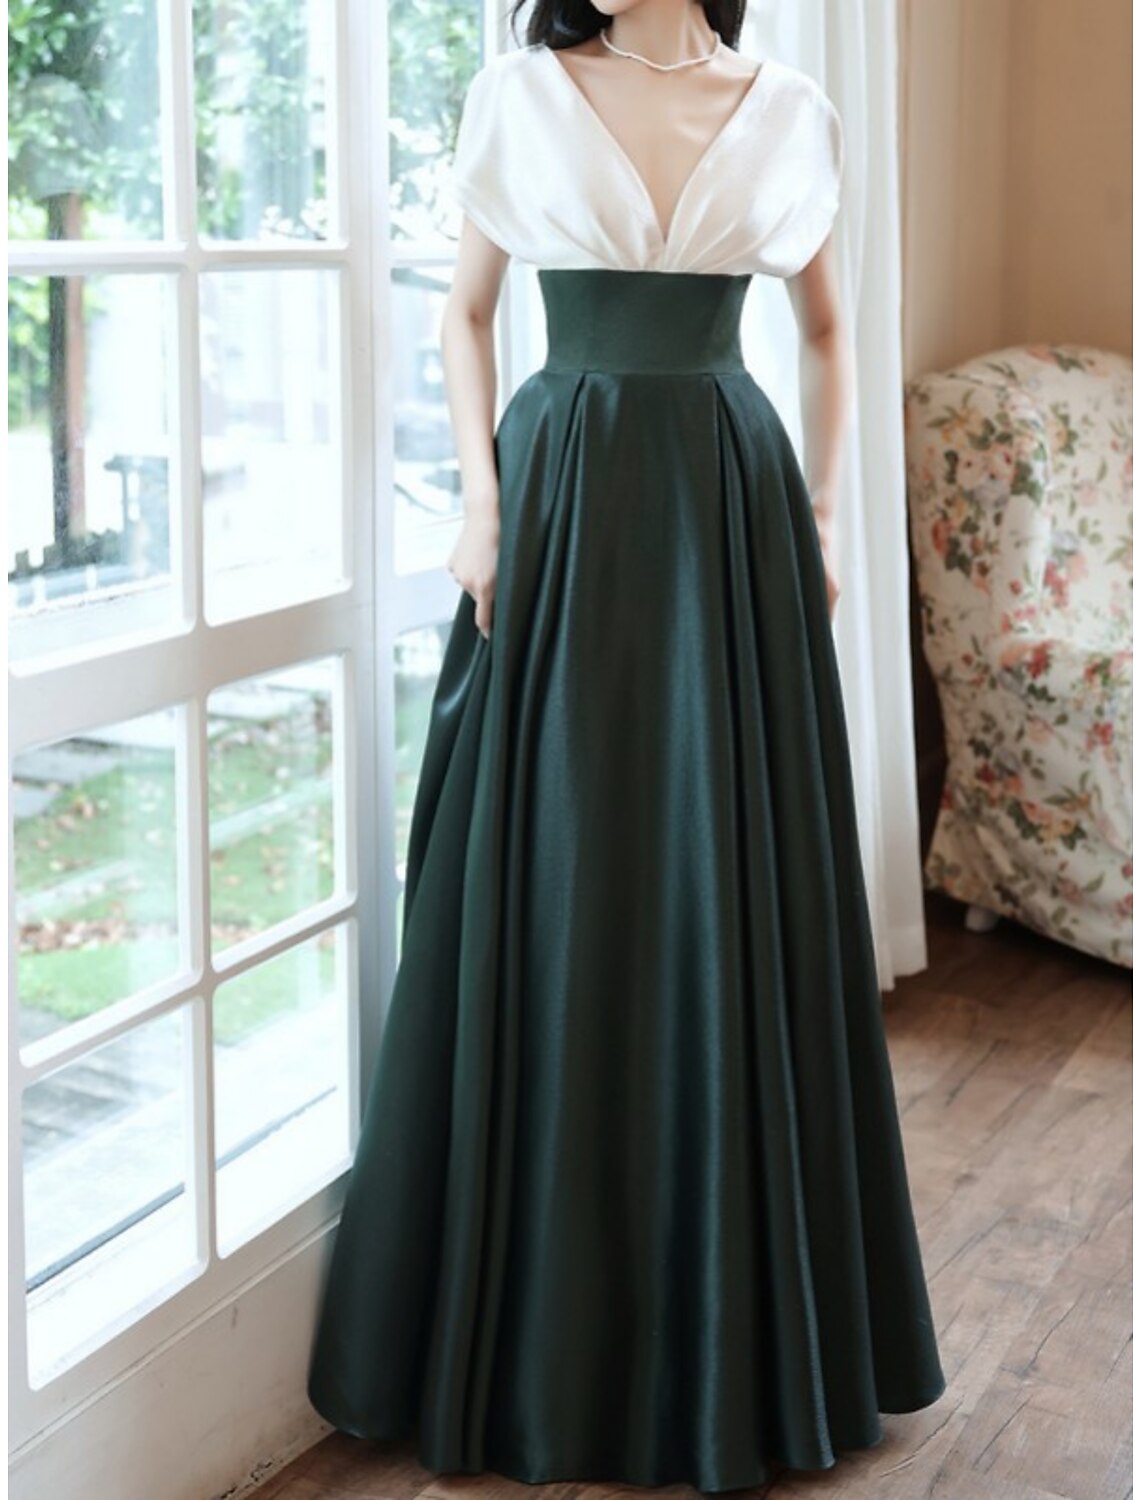 Sheath / Column Mother of the Bride Dress Wedding Guest Vintage Elegant V Neck Floor Length Satin Short Sleeve with Pleats Color Block